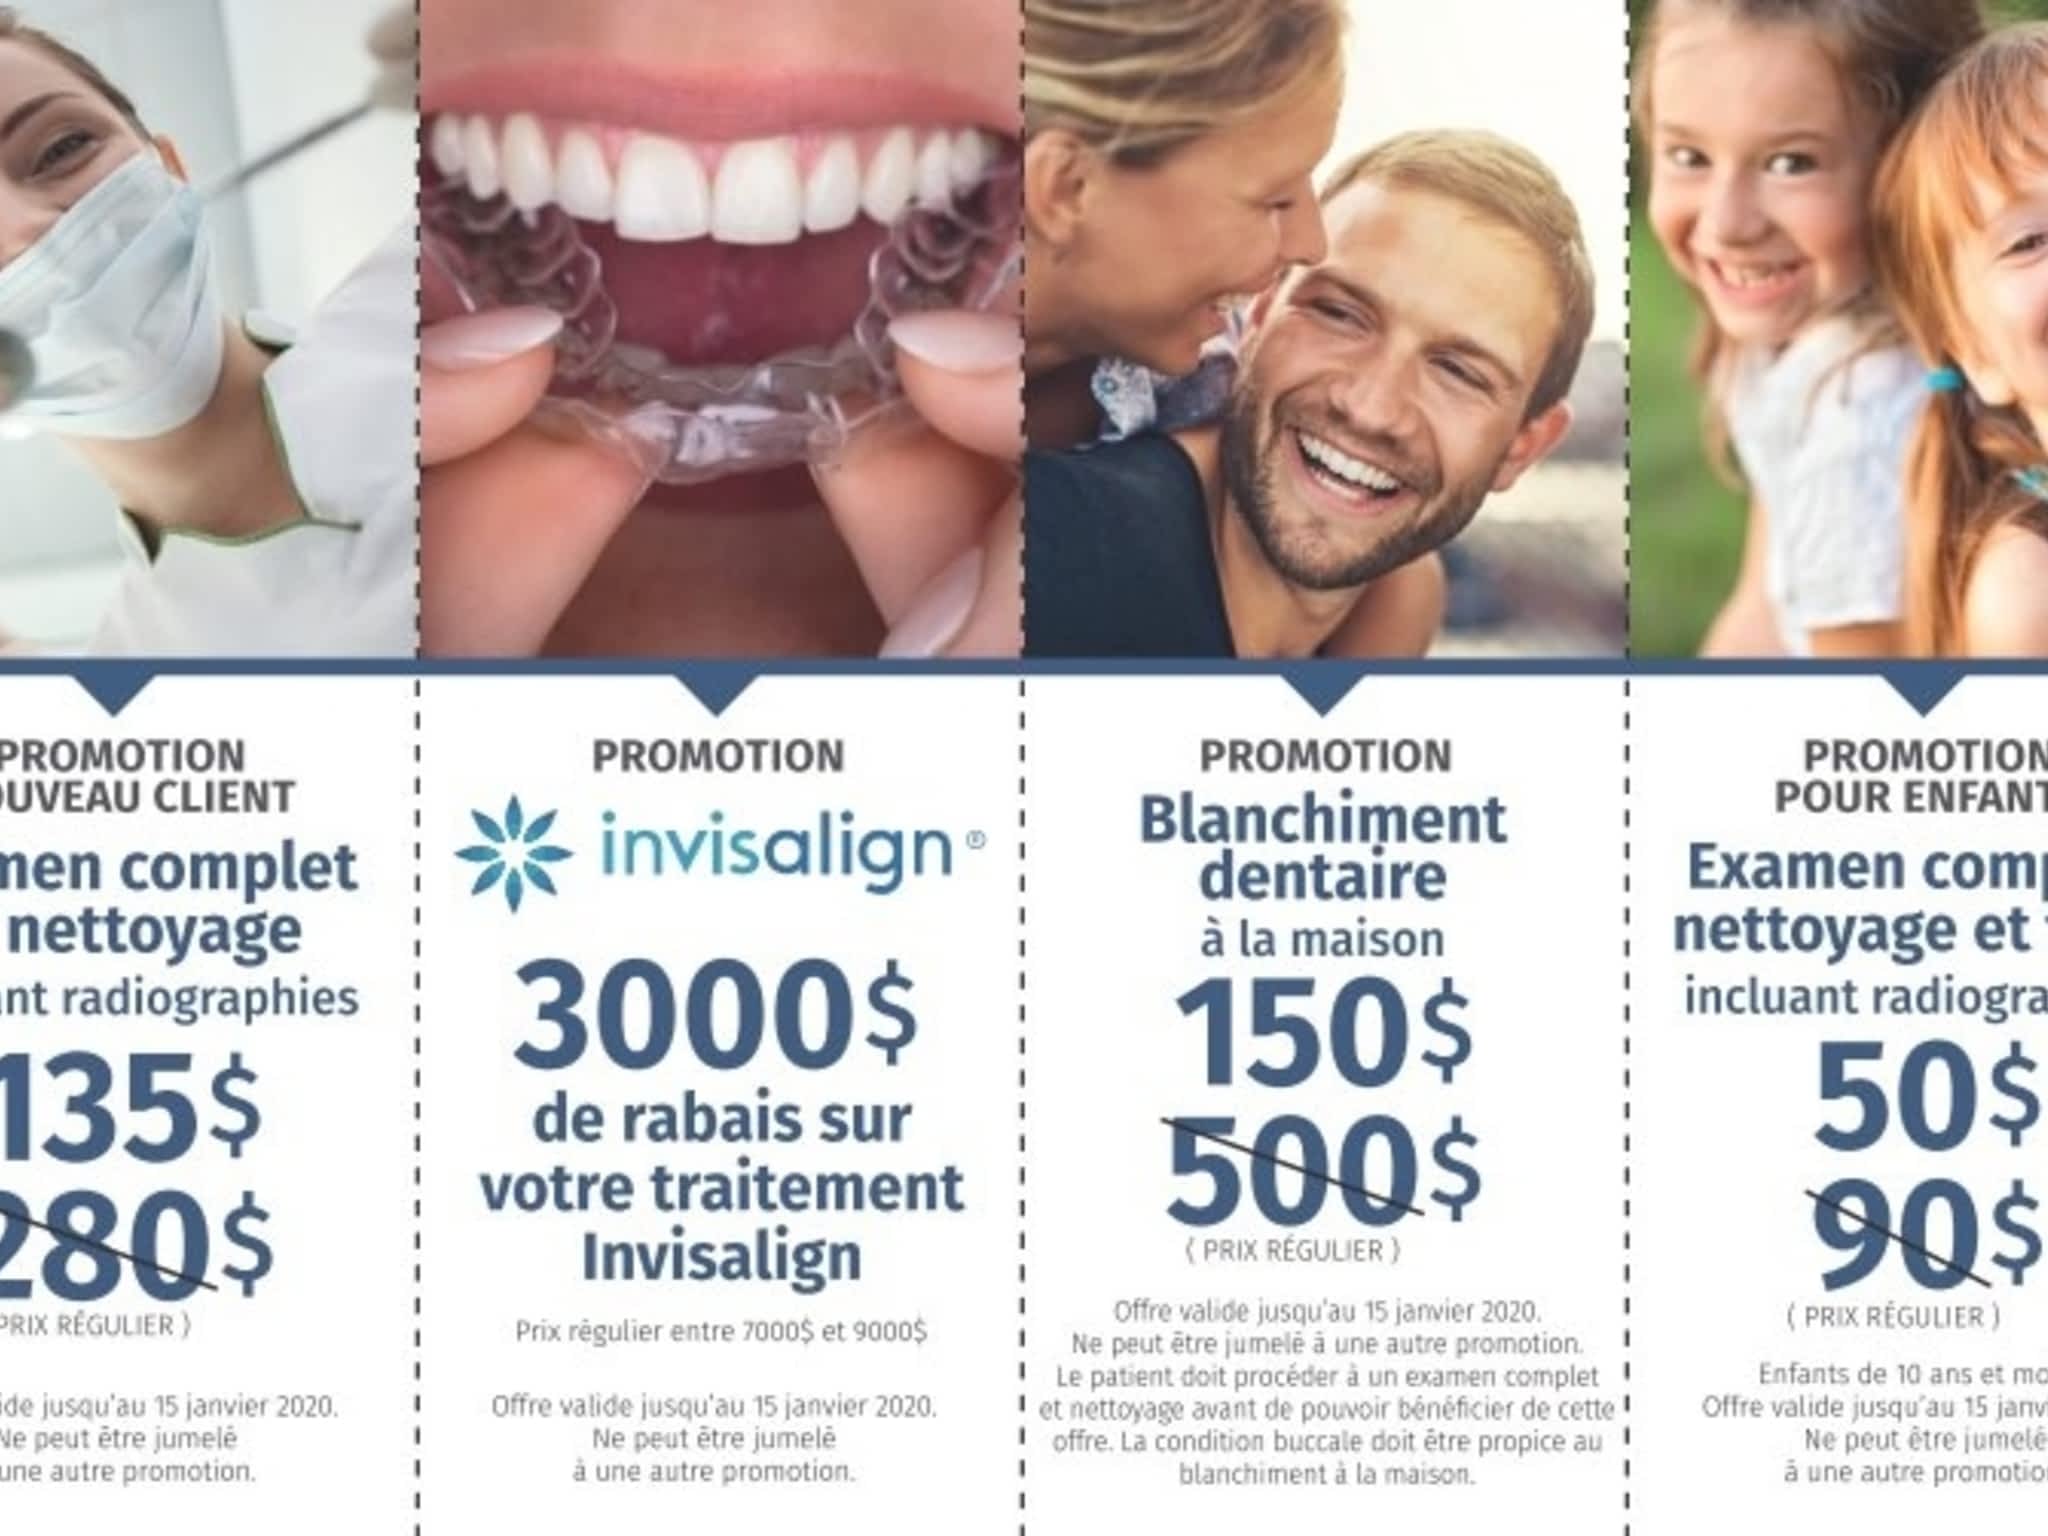 photo Carrefour Dentaire 440 - Dentiste